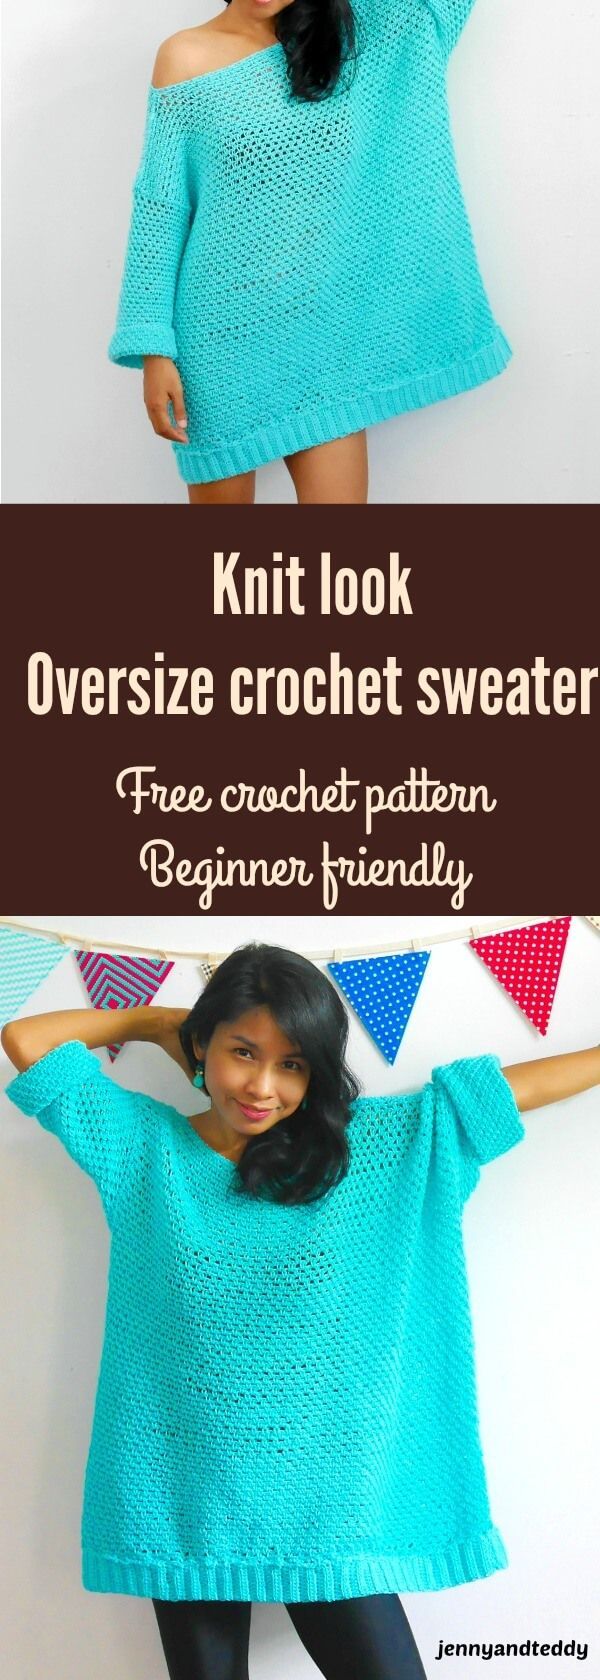 How-to-Crochet-a-Bodycon-DressTop.jpg